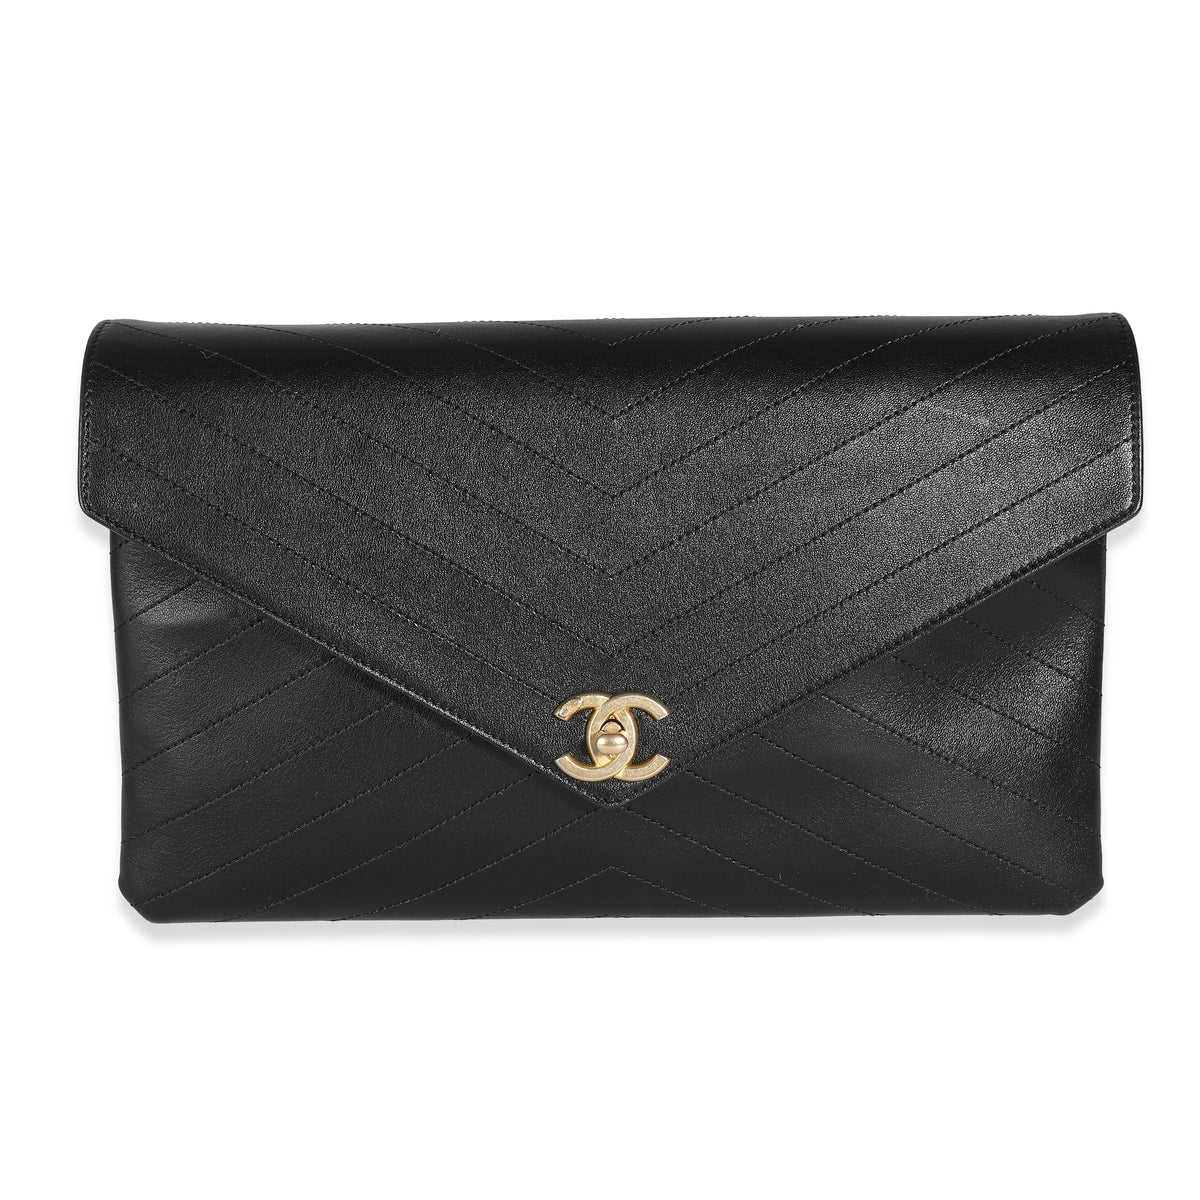 Chanel Black Chevron Lambskin Envelope Clutch